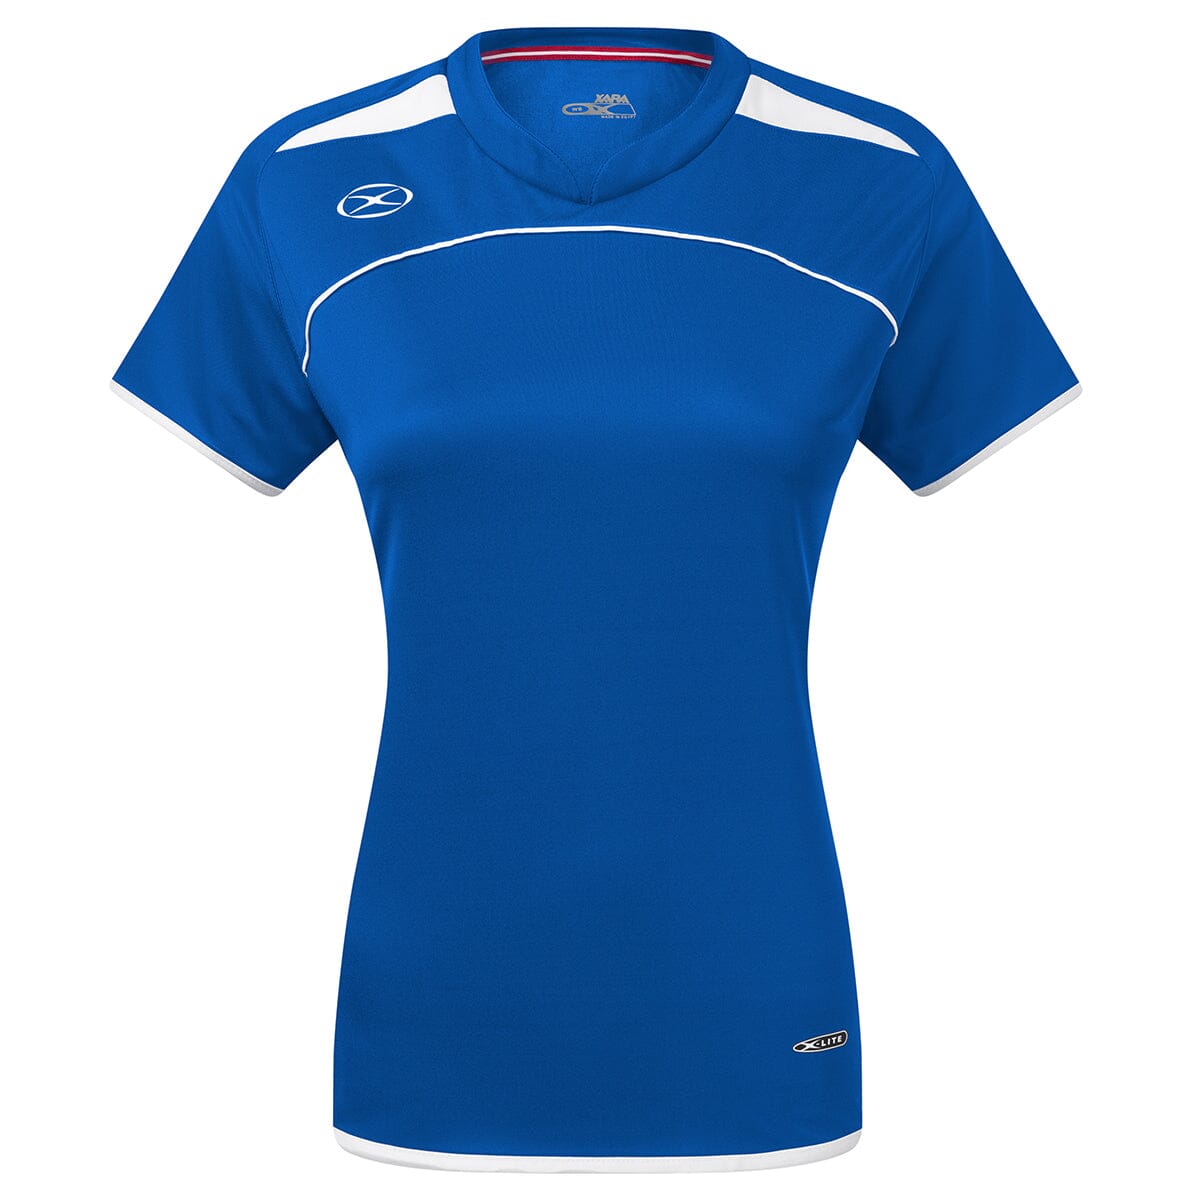 Cardiff Jersey - Female Shirt Xara Soccer Royal/White Womens Large 